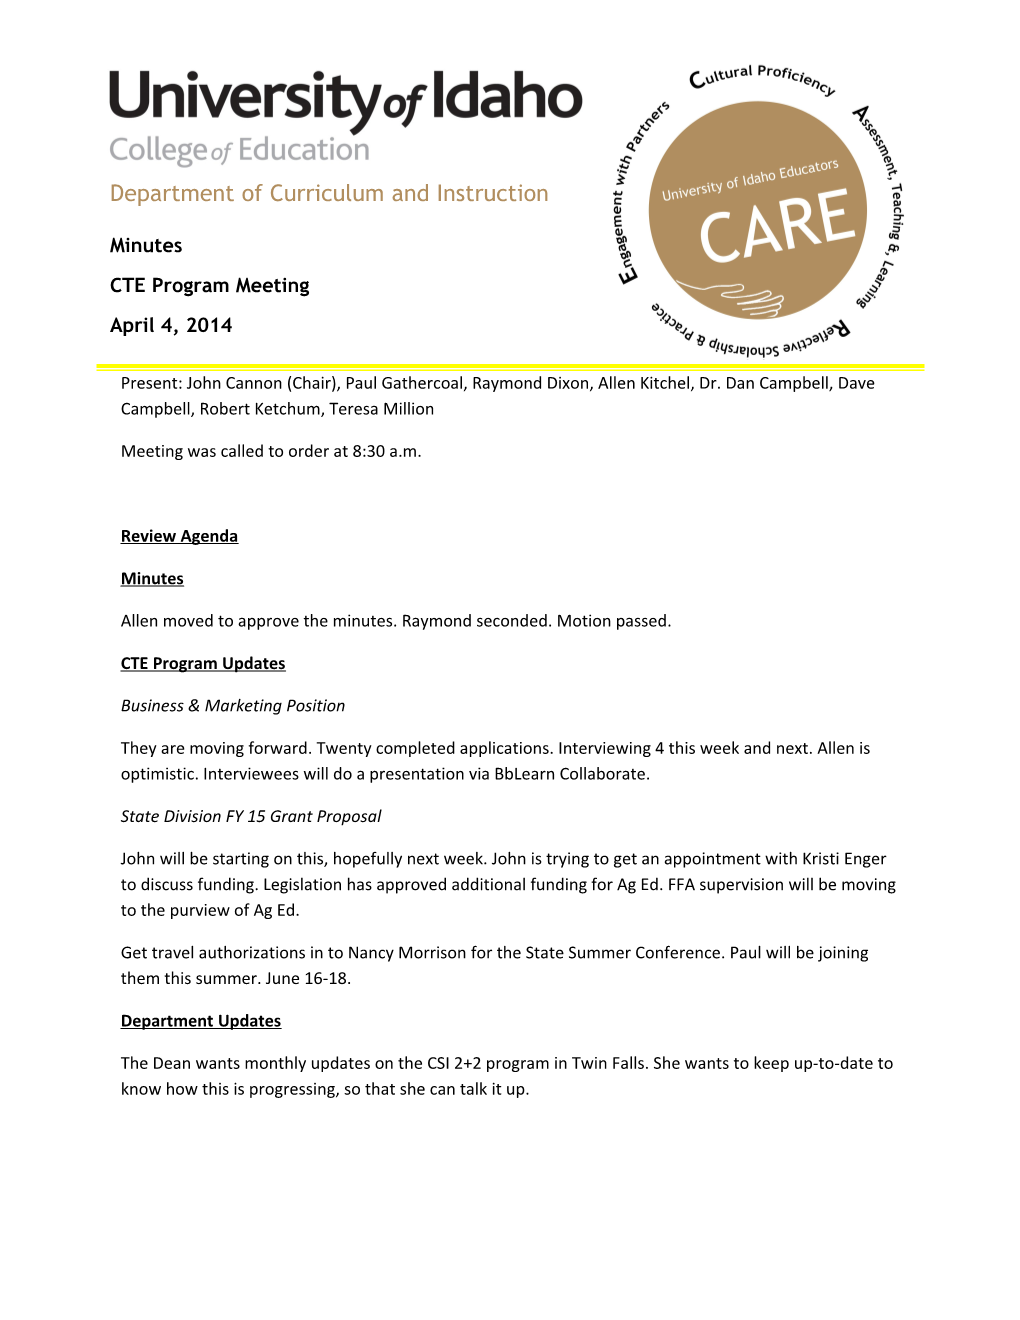 Curriculum & Instruction/ CTE Program Meeting/April 4, 20141